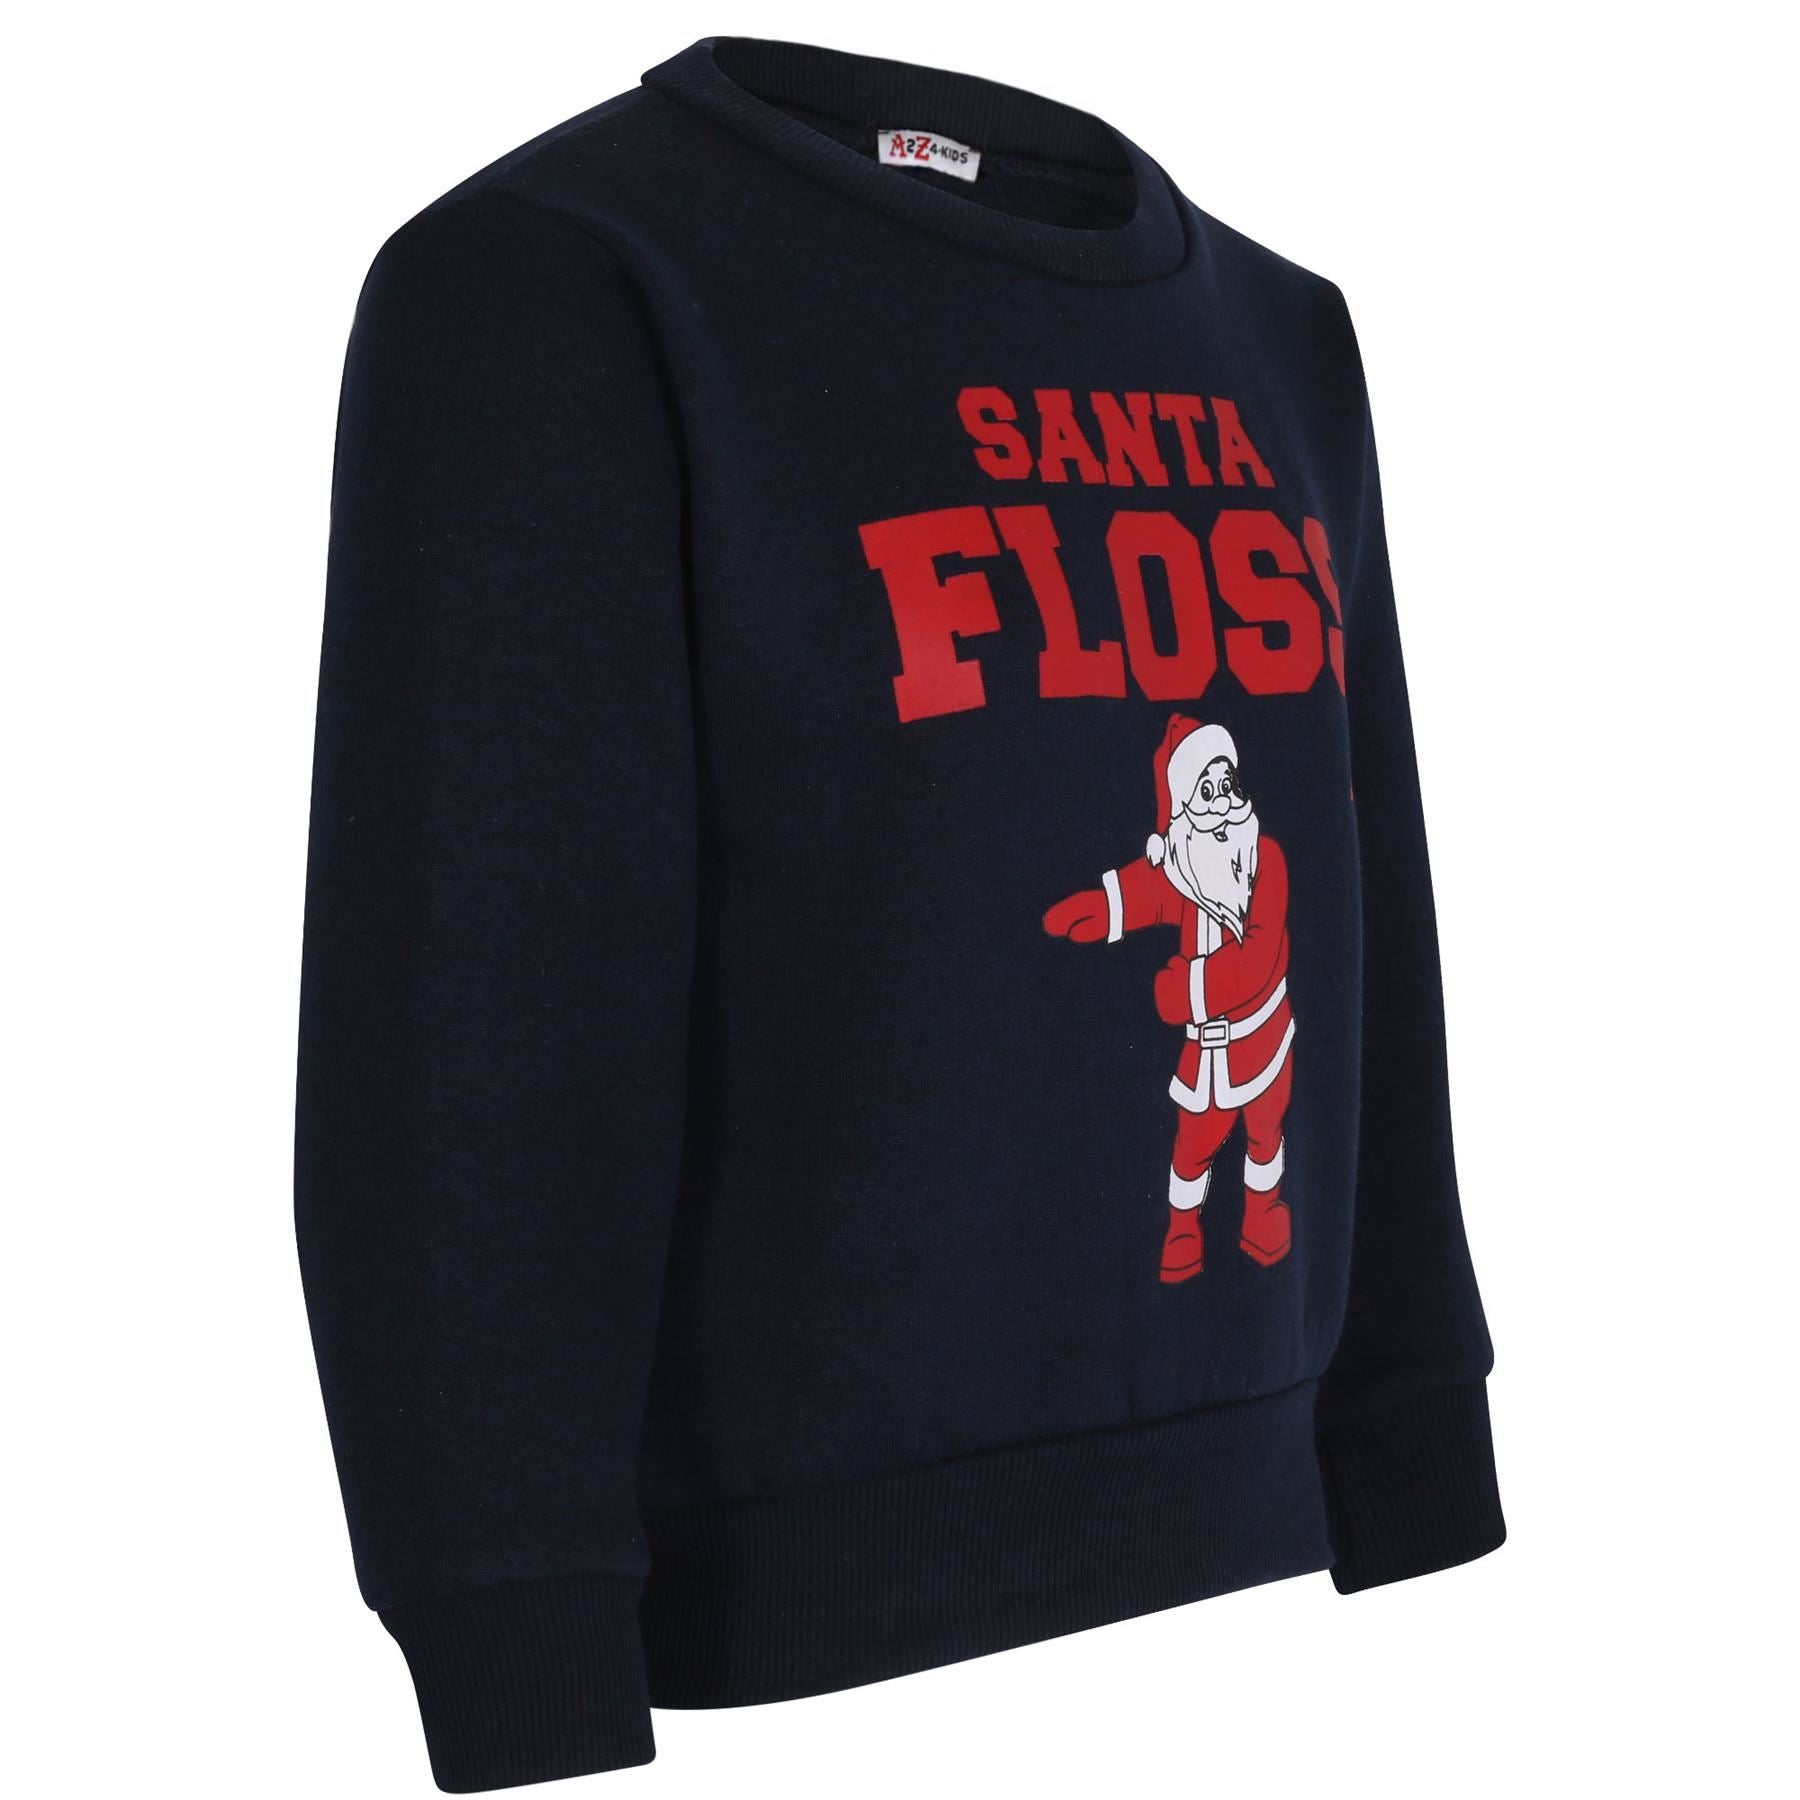 Kids Girls Boys Navy Blue Christmas Jumper Pullover Sweatshirt Santa Floss Print